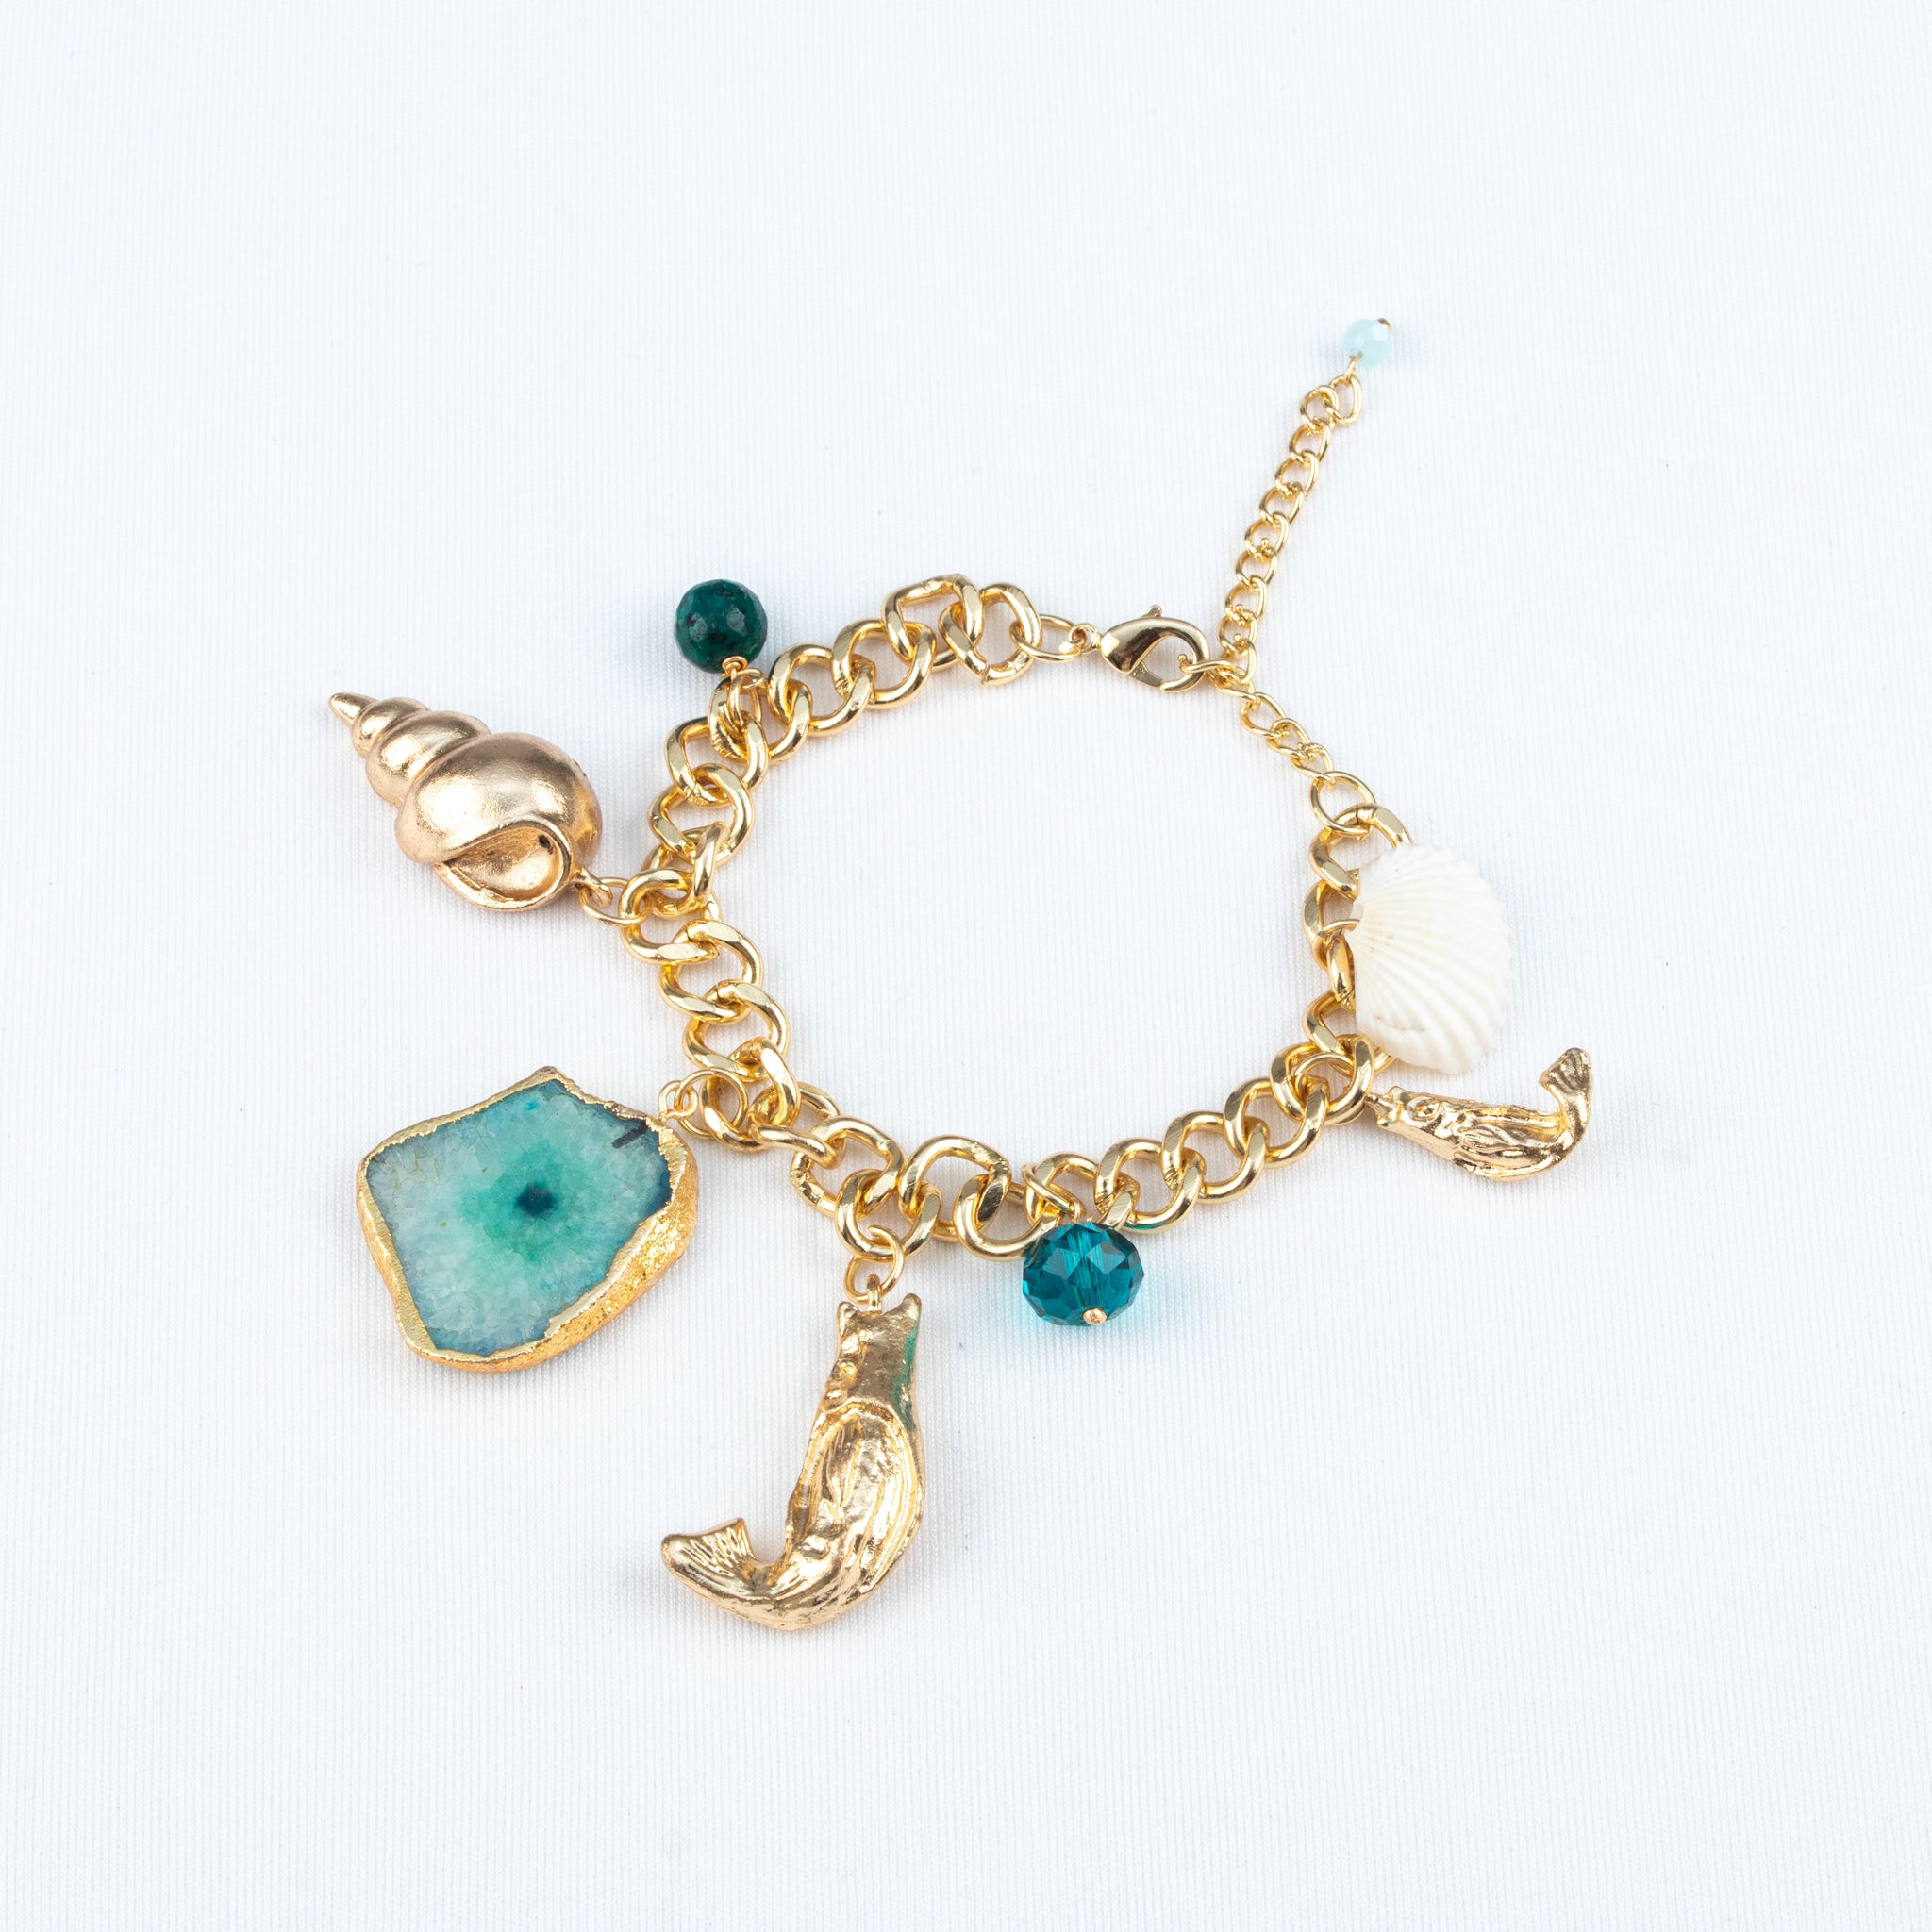 Chunky agate stone and charm bracelet